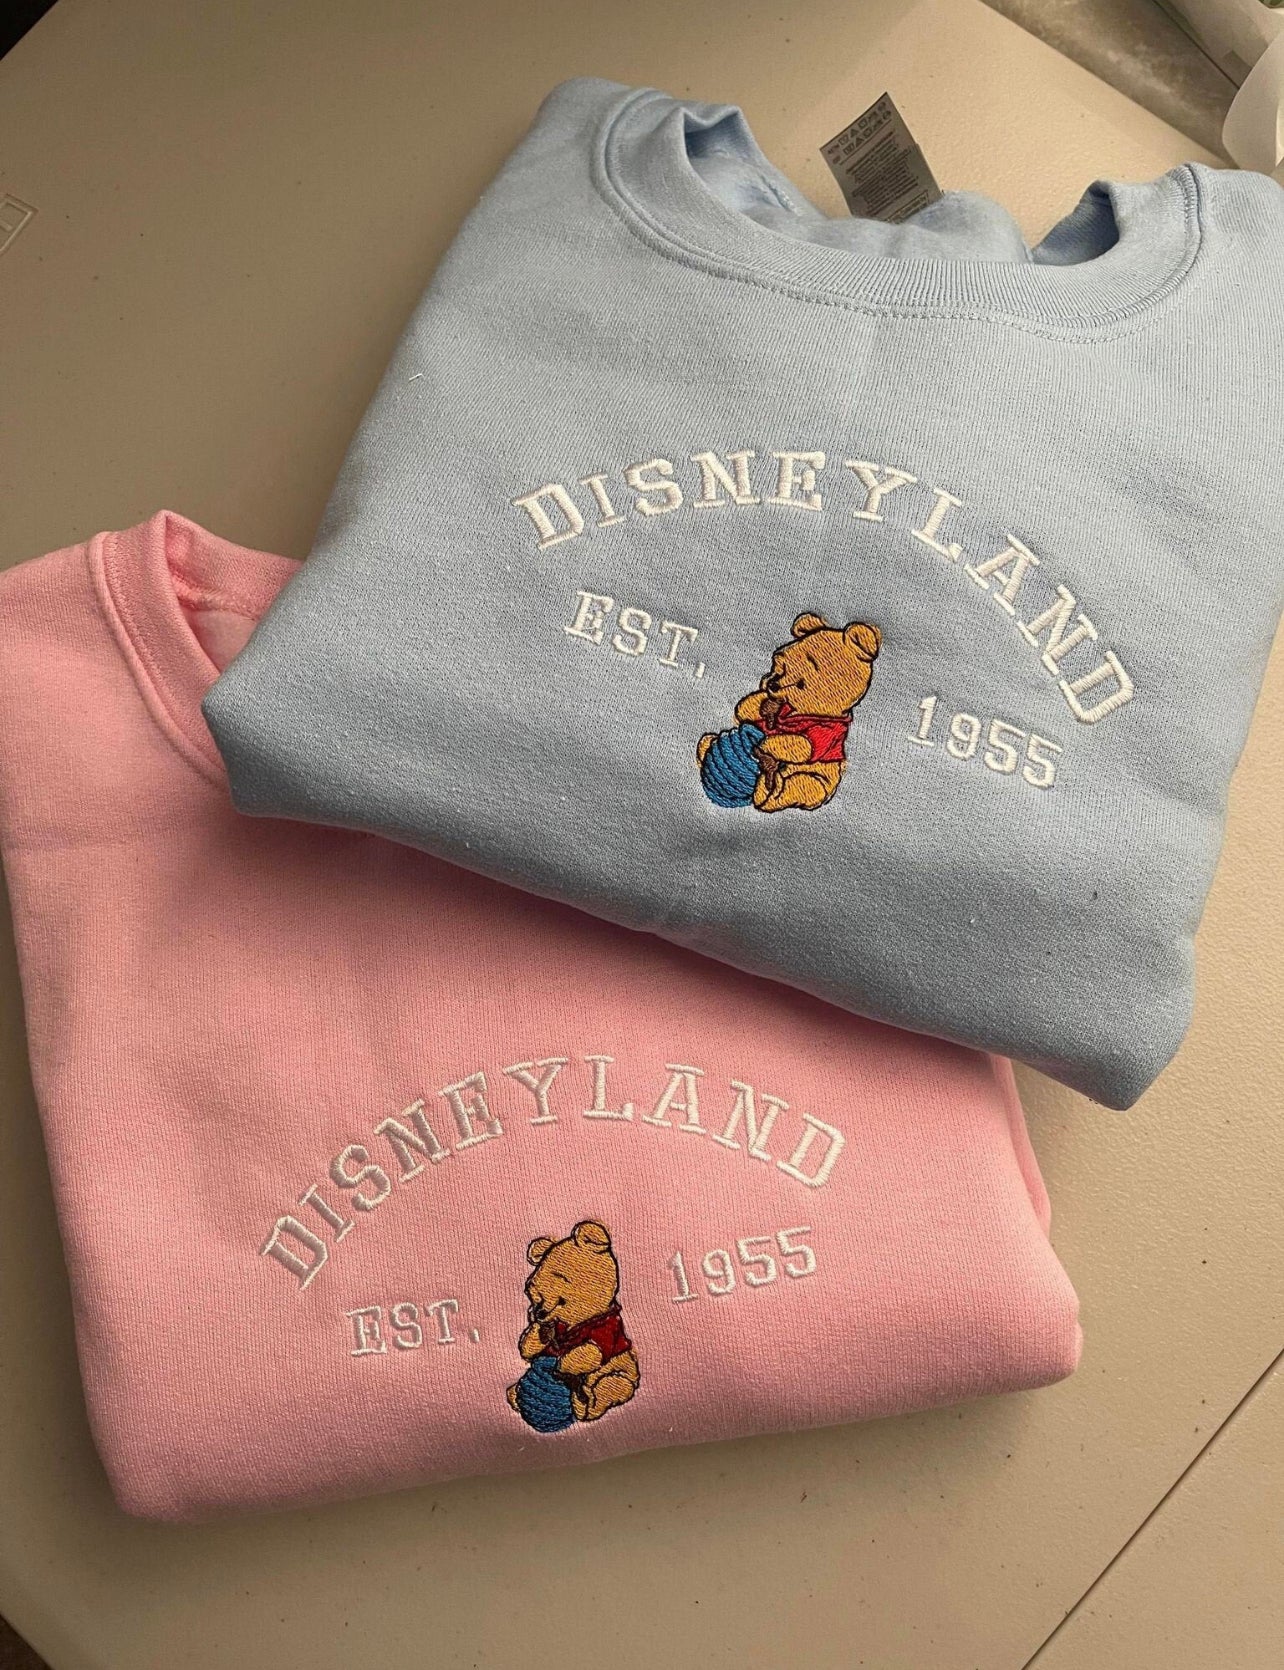 Disneyland embroidered sweatshirt